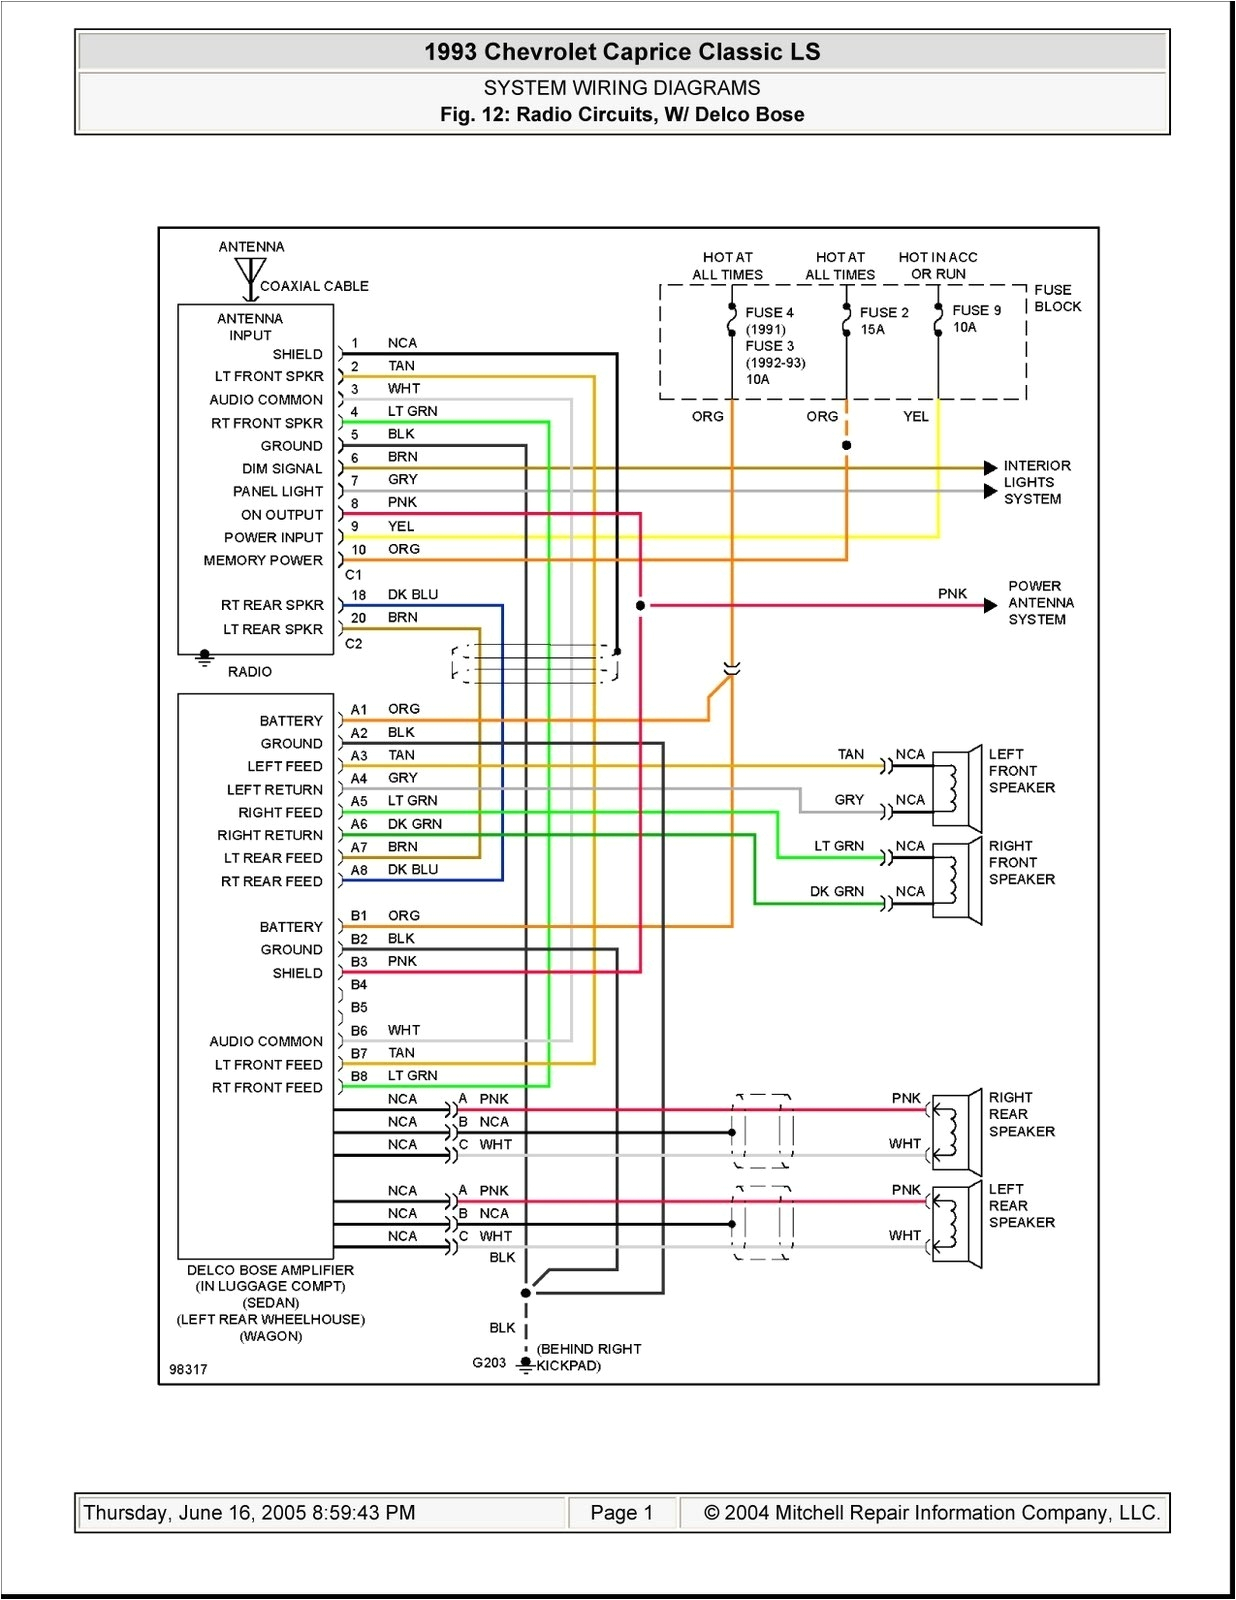 microtech lt8 wiring diagram fresh microtech lt8 wiring diagram sample